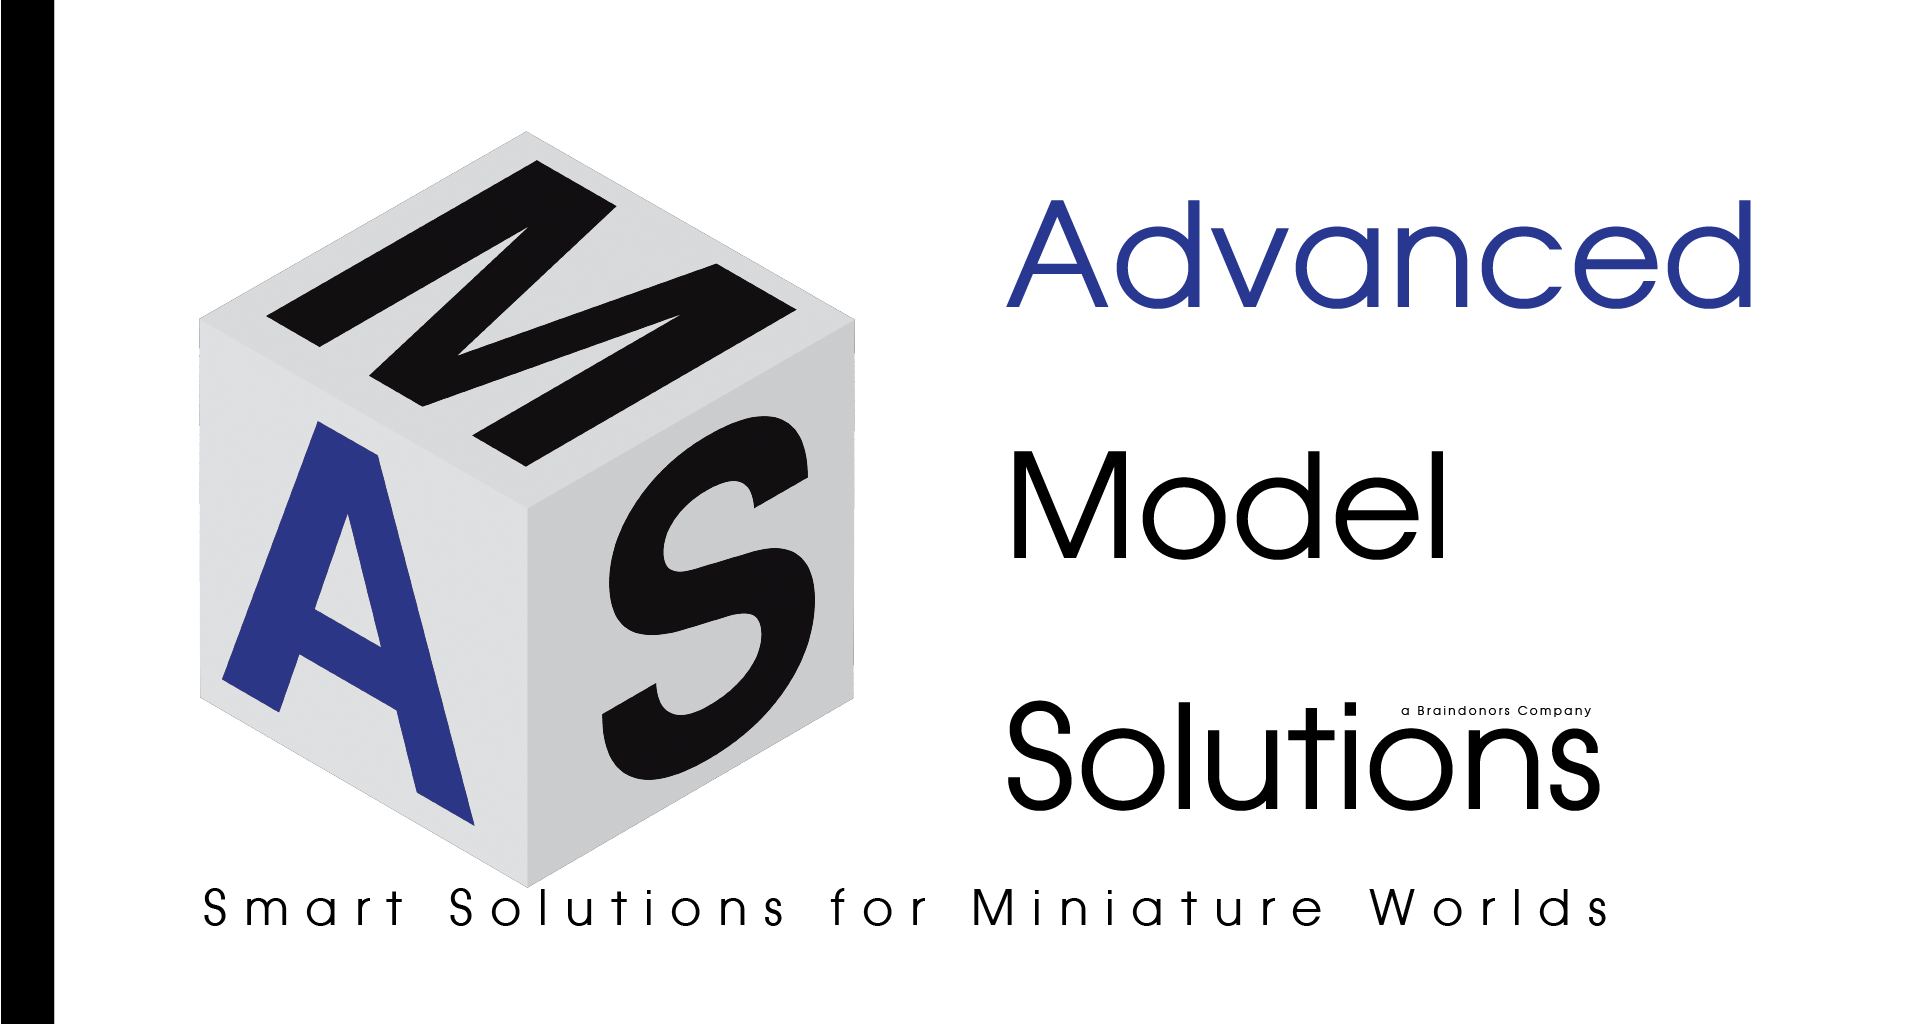 Advanced Model Solutions